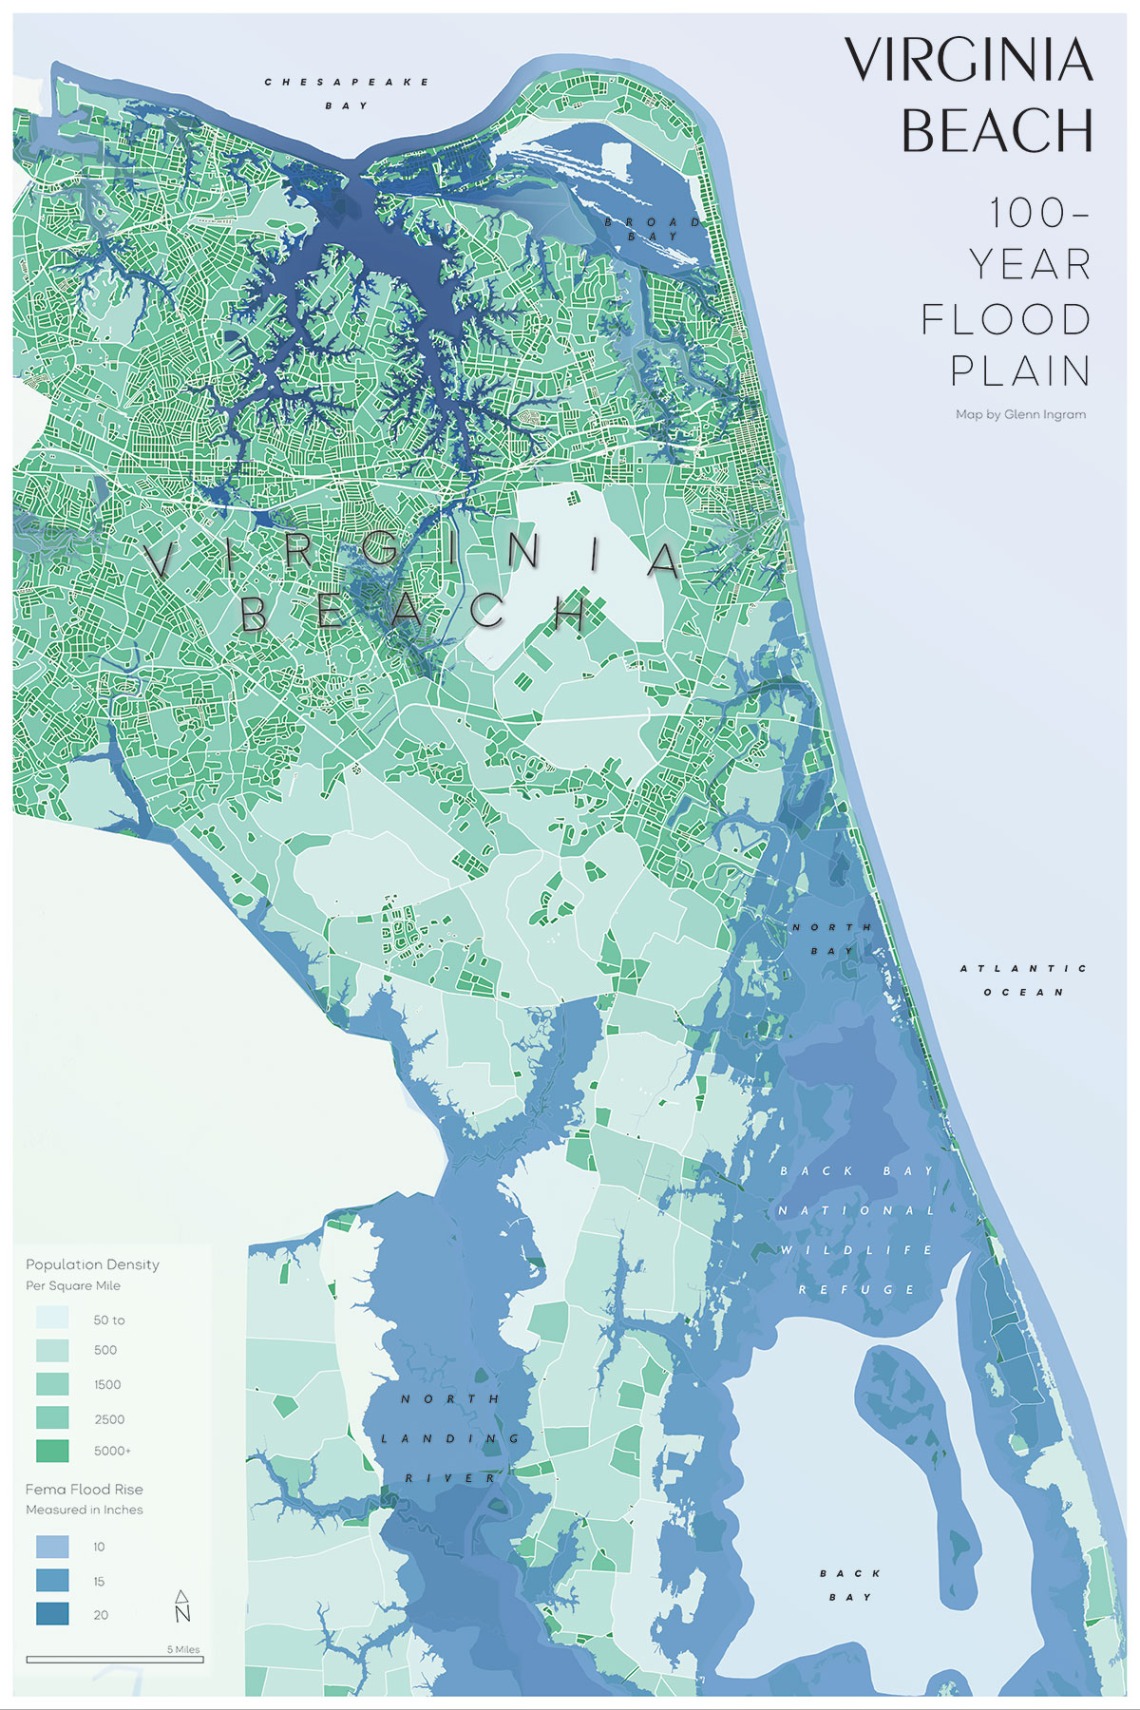 Virginia Beach 100-year floodplain map by Glenn Ingram